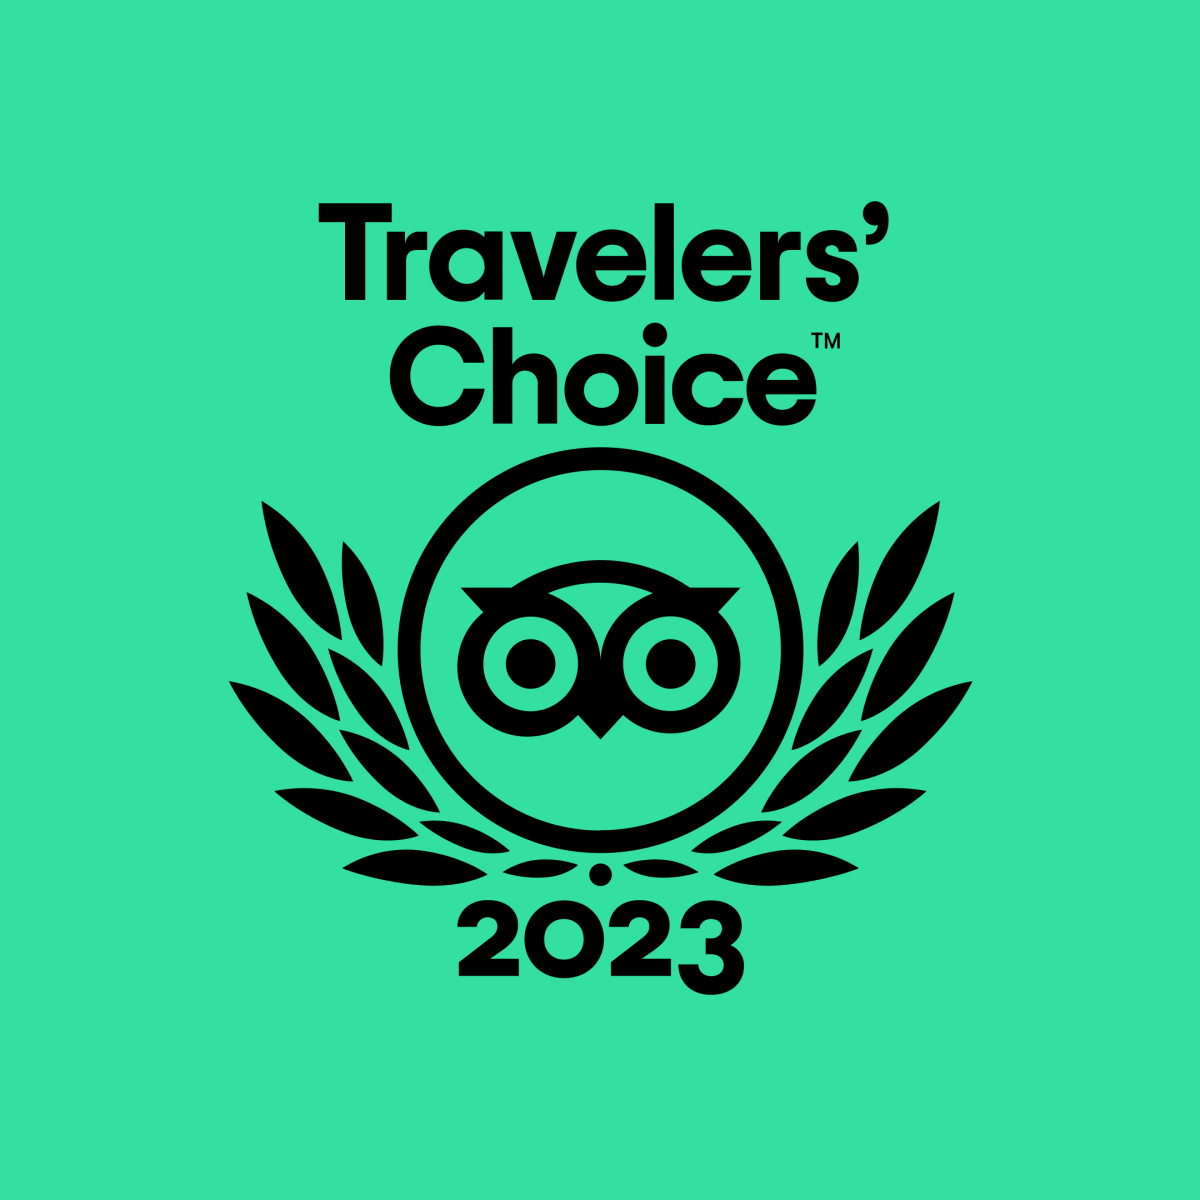 Superior Tours Vallarta - Tripadvisor, winner of the 2023 Travelers' Choice Awards